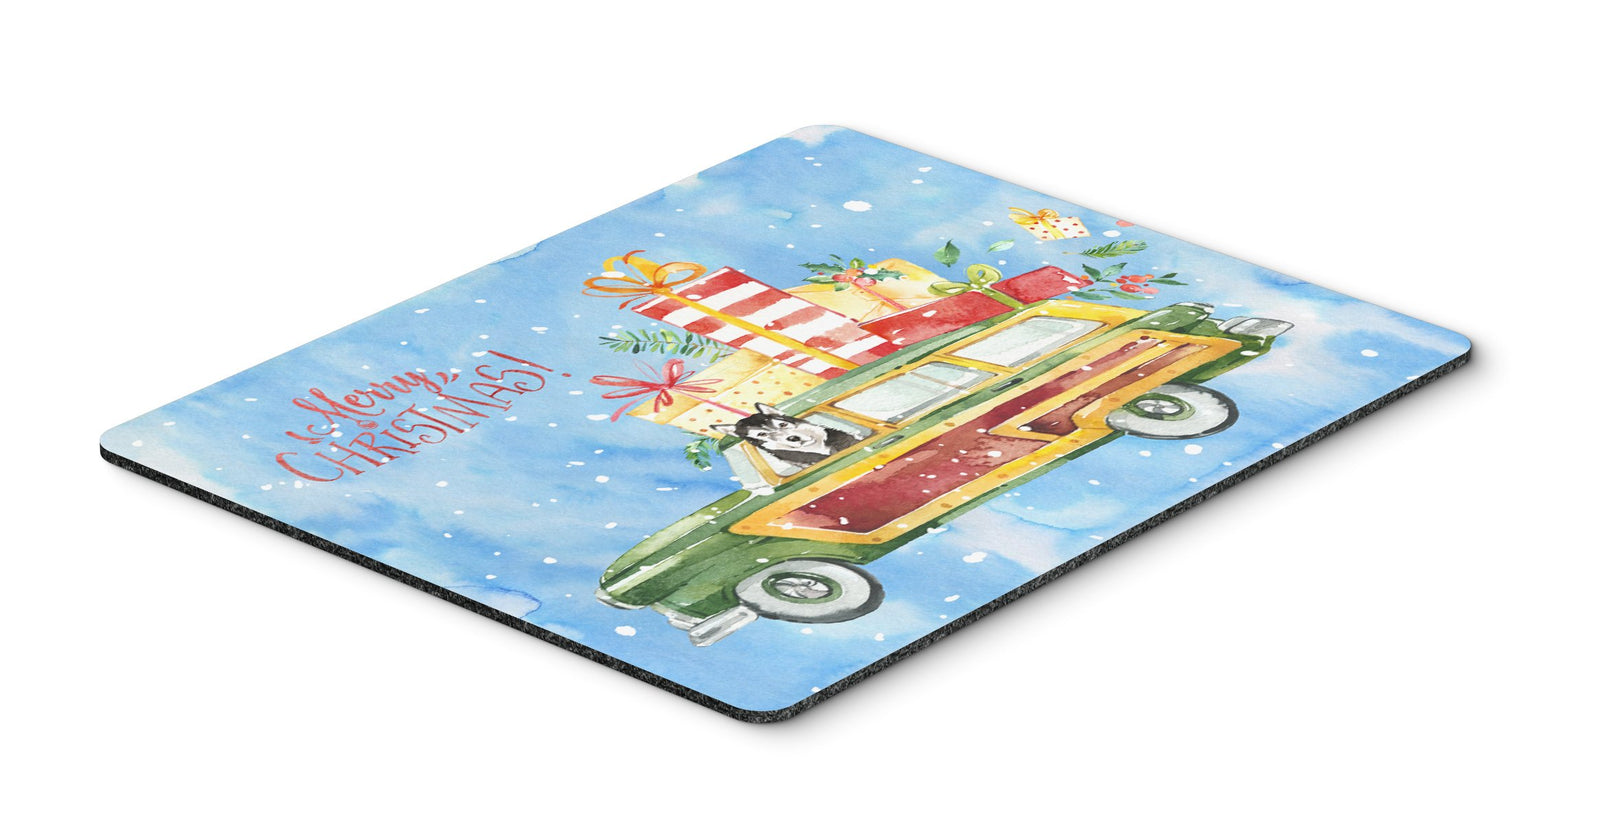 Merry Christmas Alaskan Malamute Mouse Pad, Hot Pad or Trivet CK2413MP by Caroline's Treasures